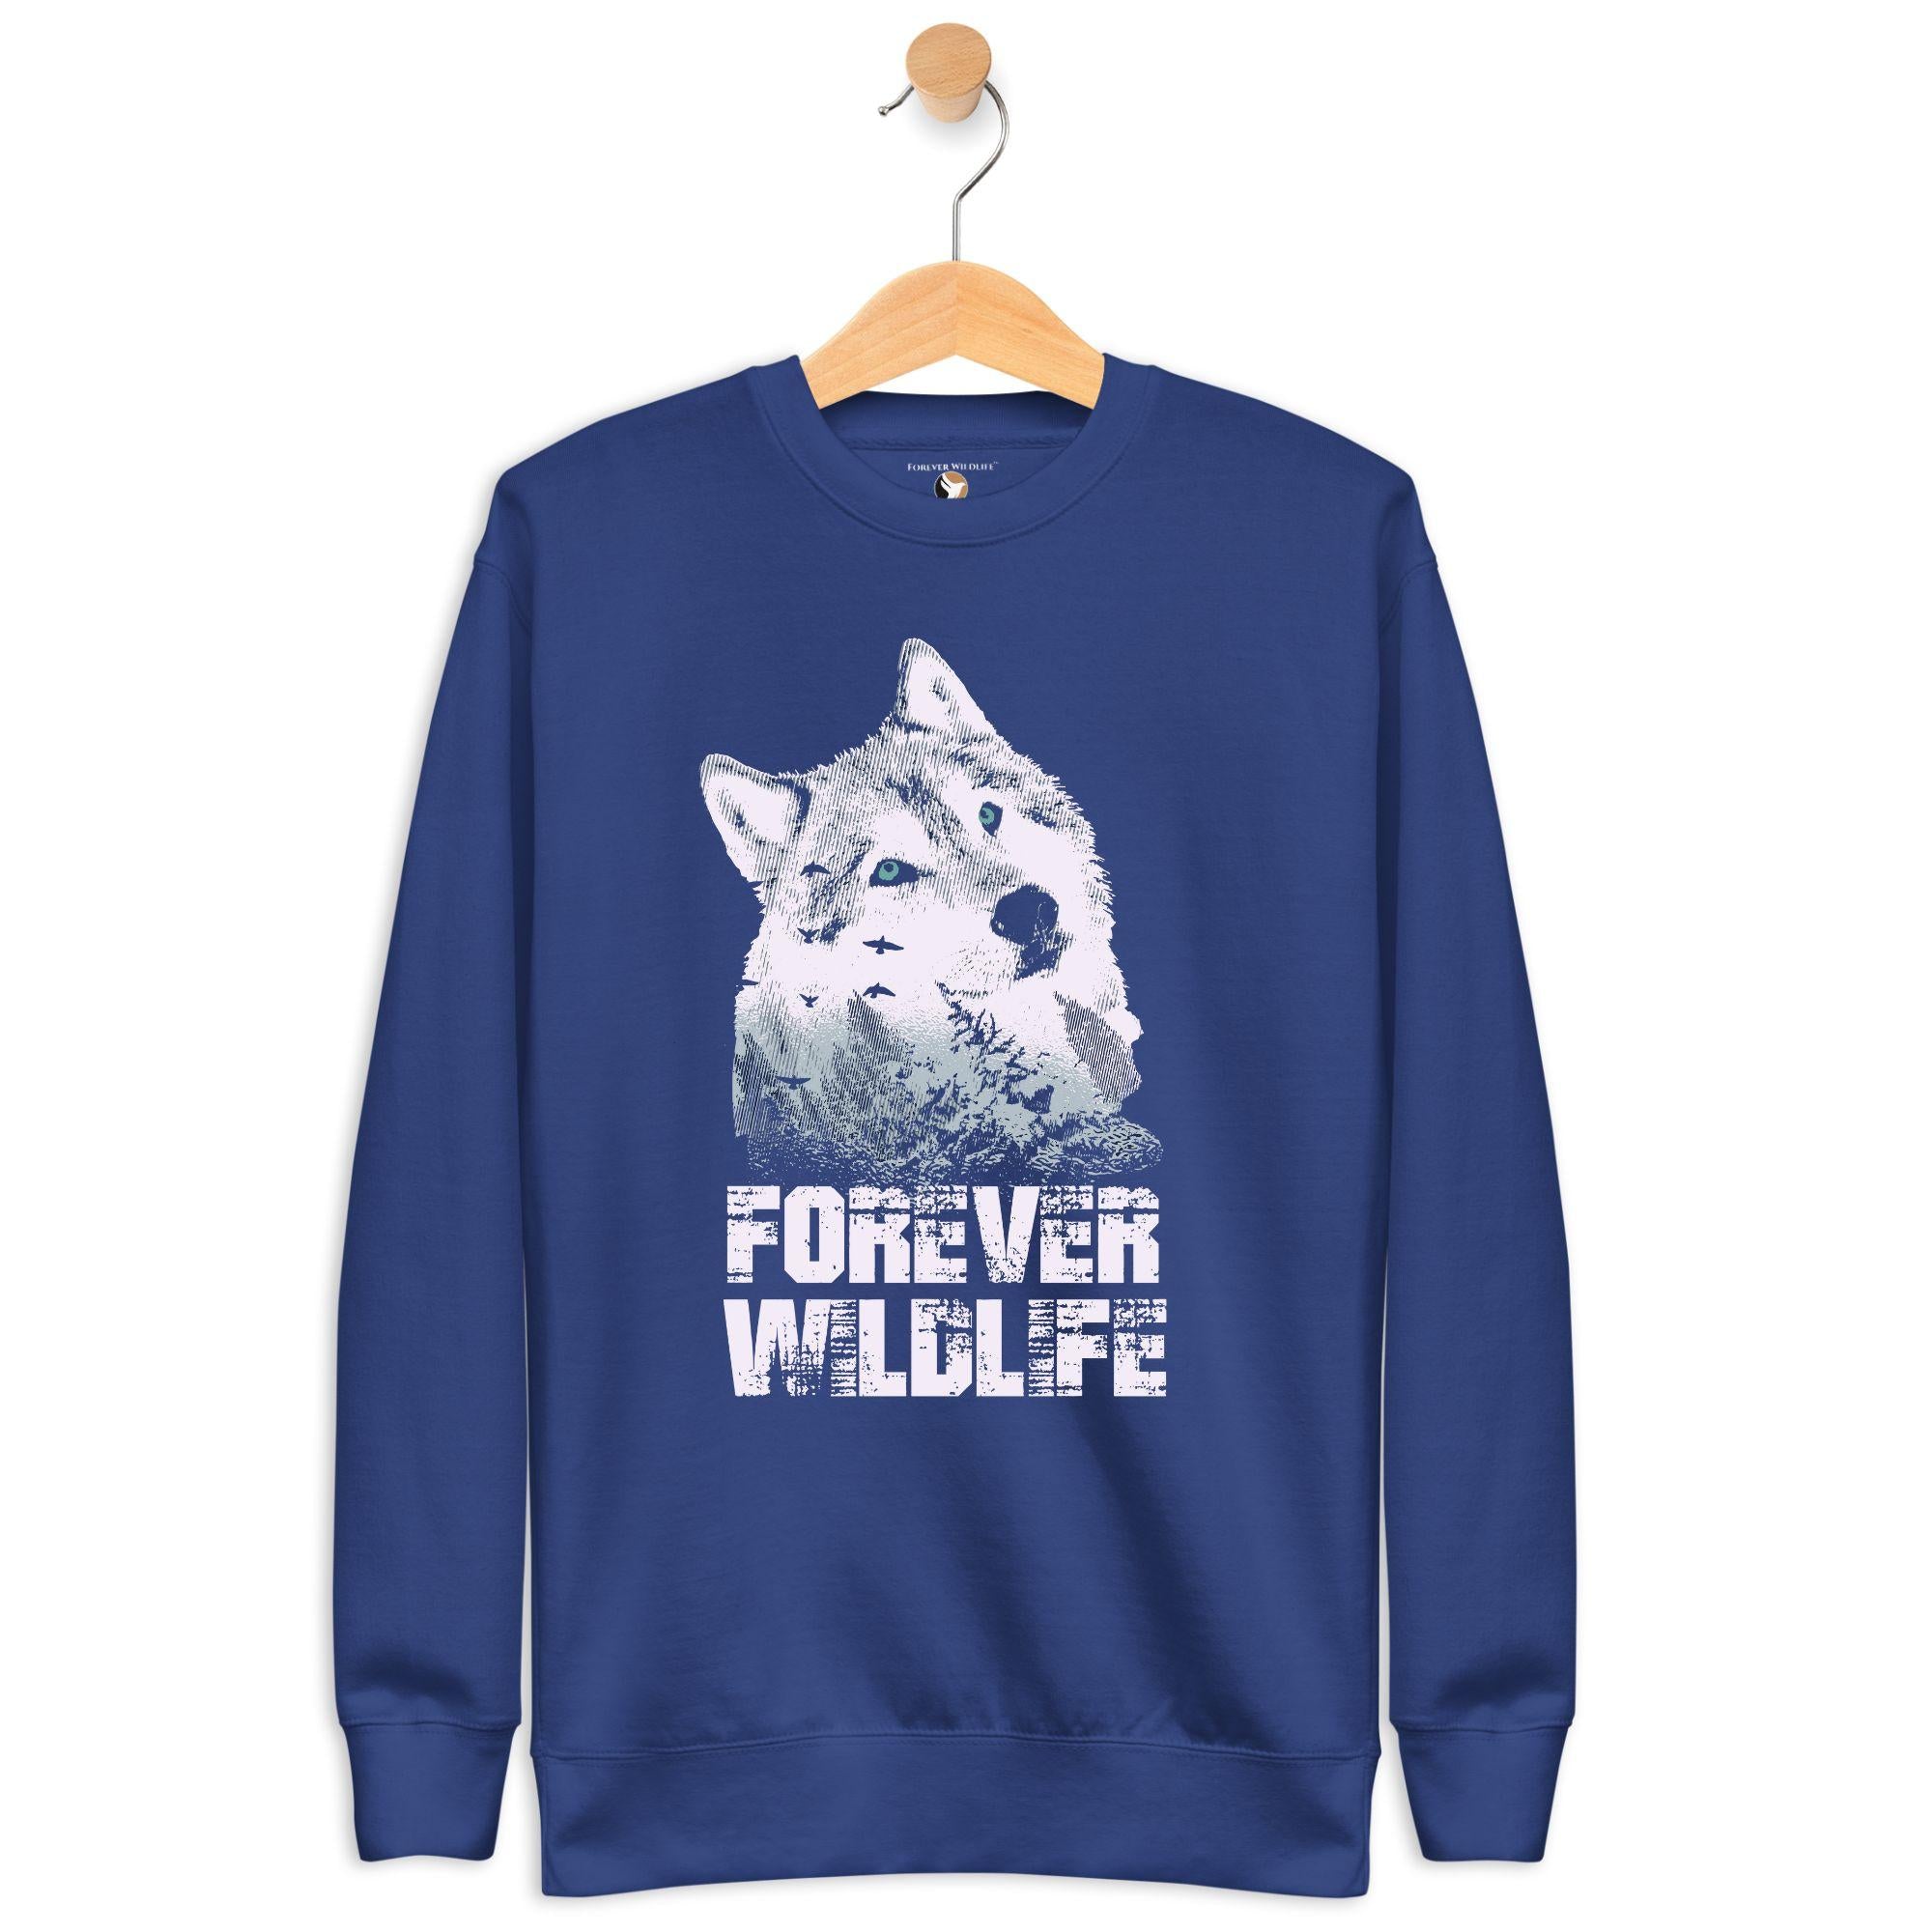 Wolf Sweatshirt in Royal-Premium Wildlife Animal Inspiration Sweatshirt Design, part of Wildlife Sweatshirts & Clothing from Forever Wildlife.